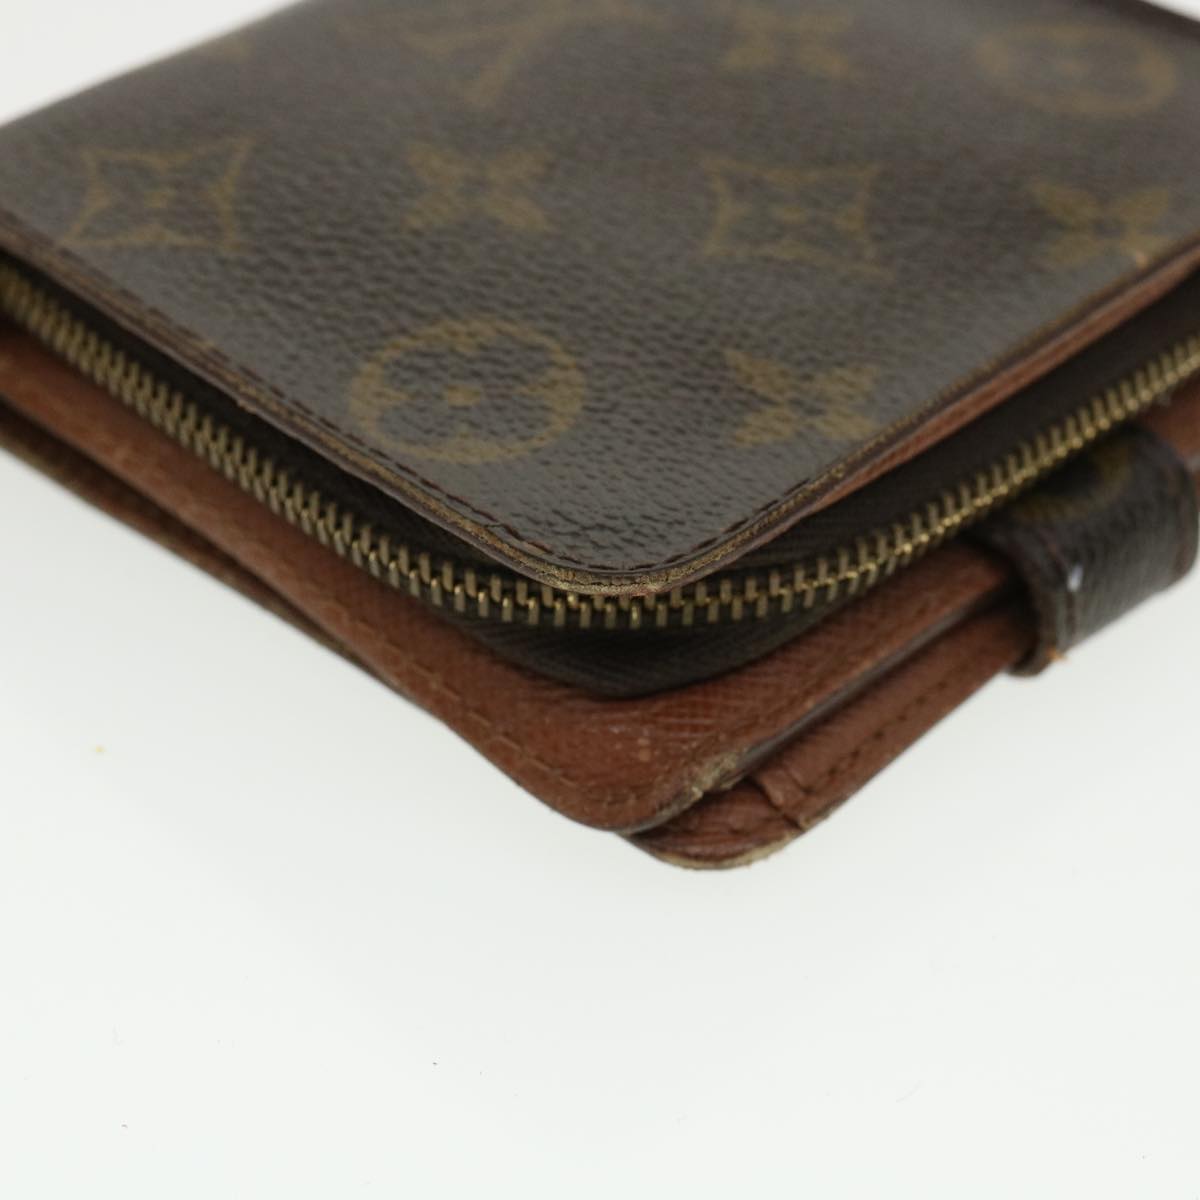 Auth Louis Vuitton Monogram Compact Zip M61667 Women's Monogram Wallet (bi- fold)